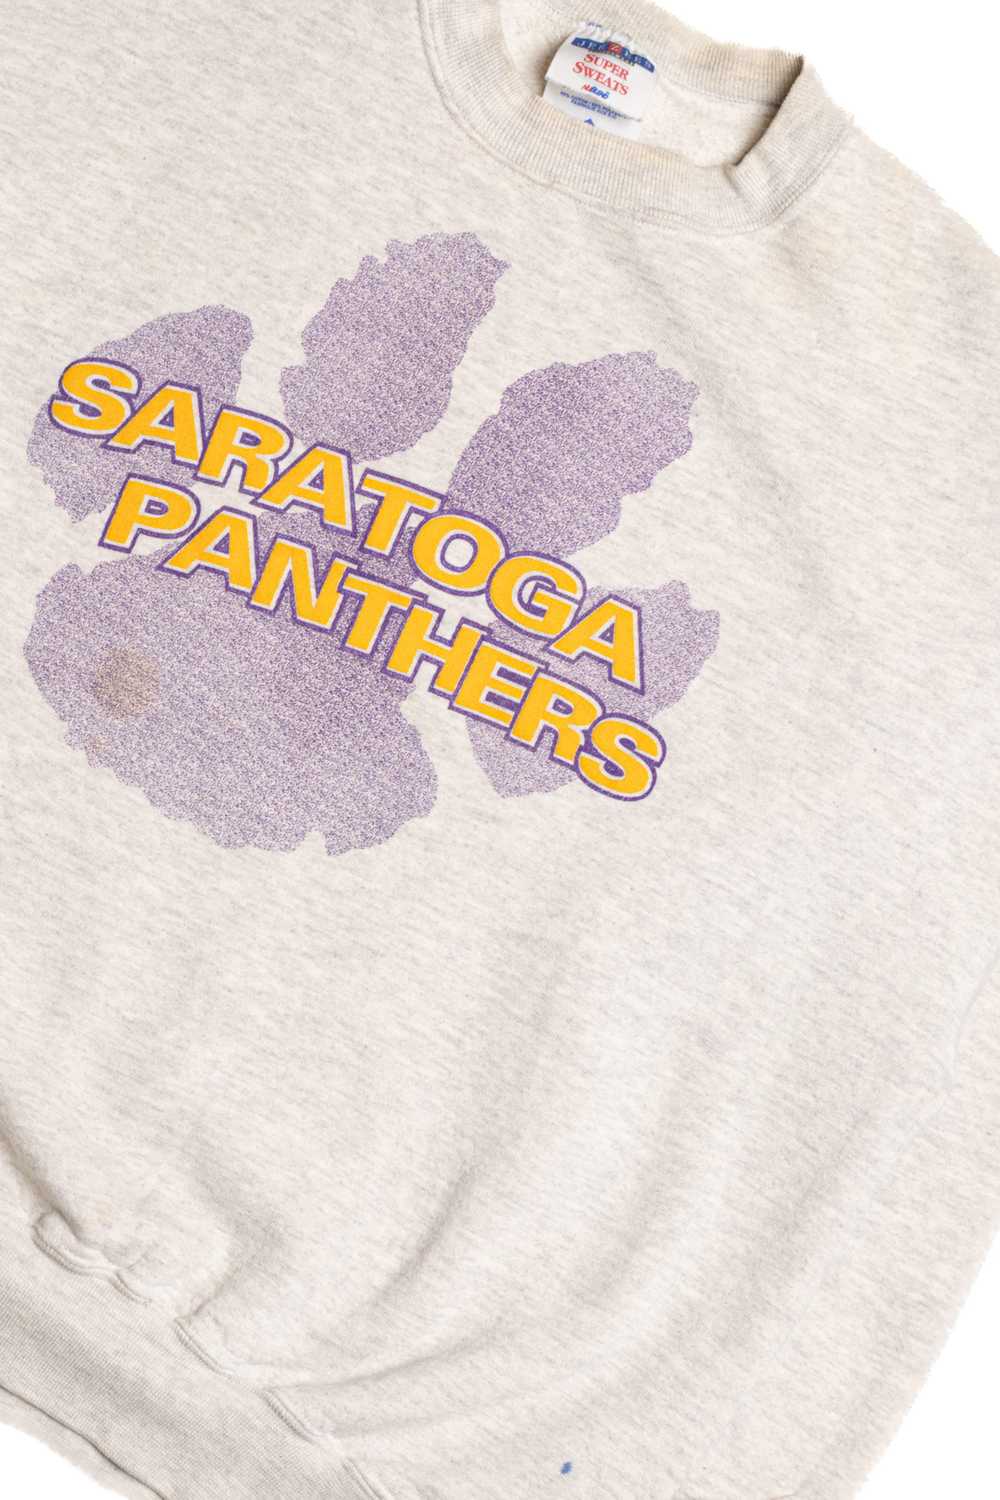 Saratoga Panthers Sweatshirt 9027 - image 2